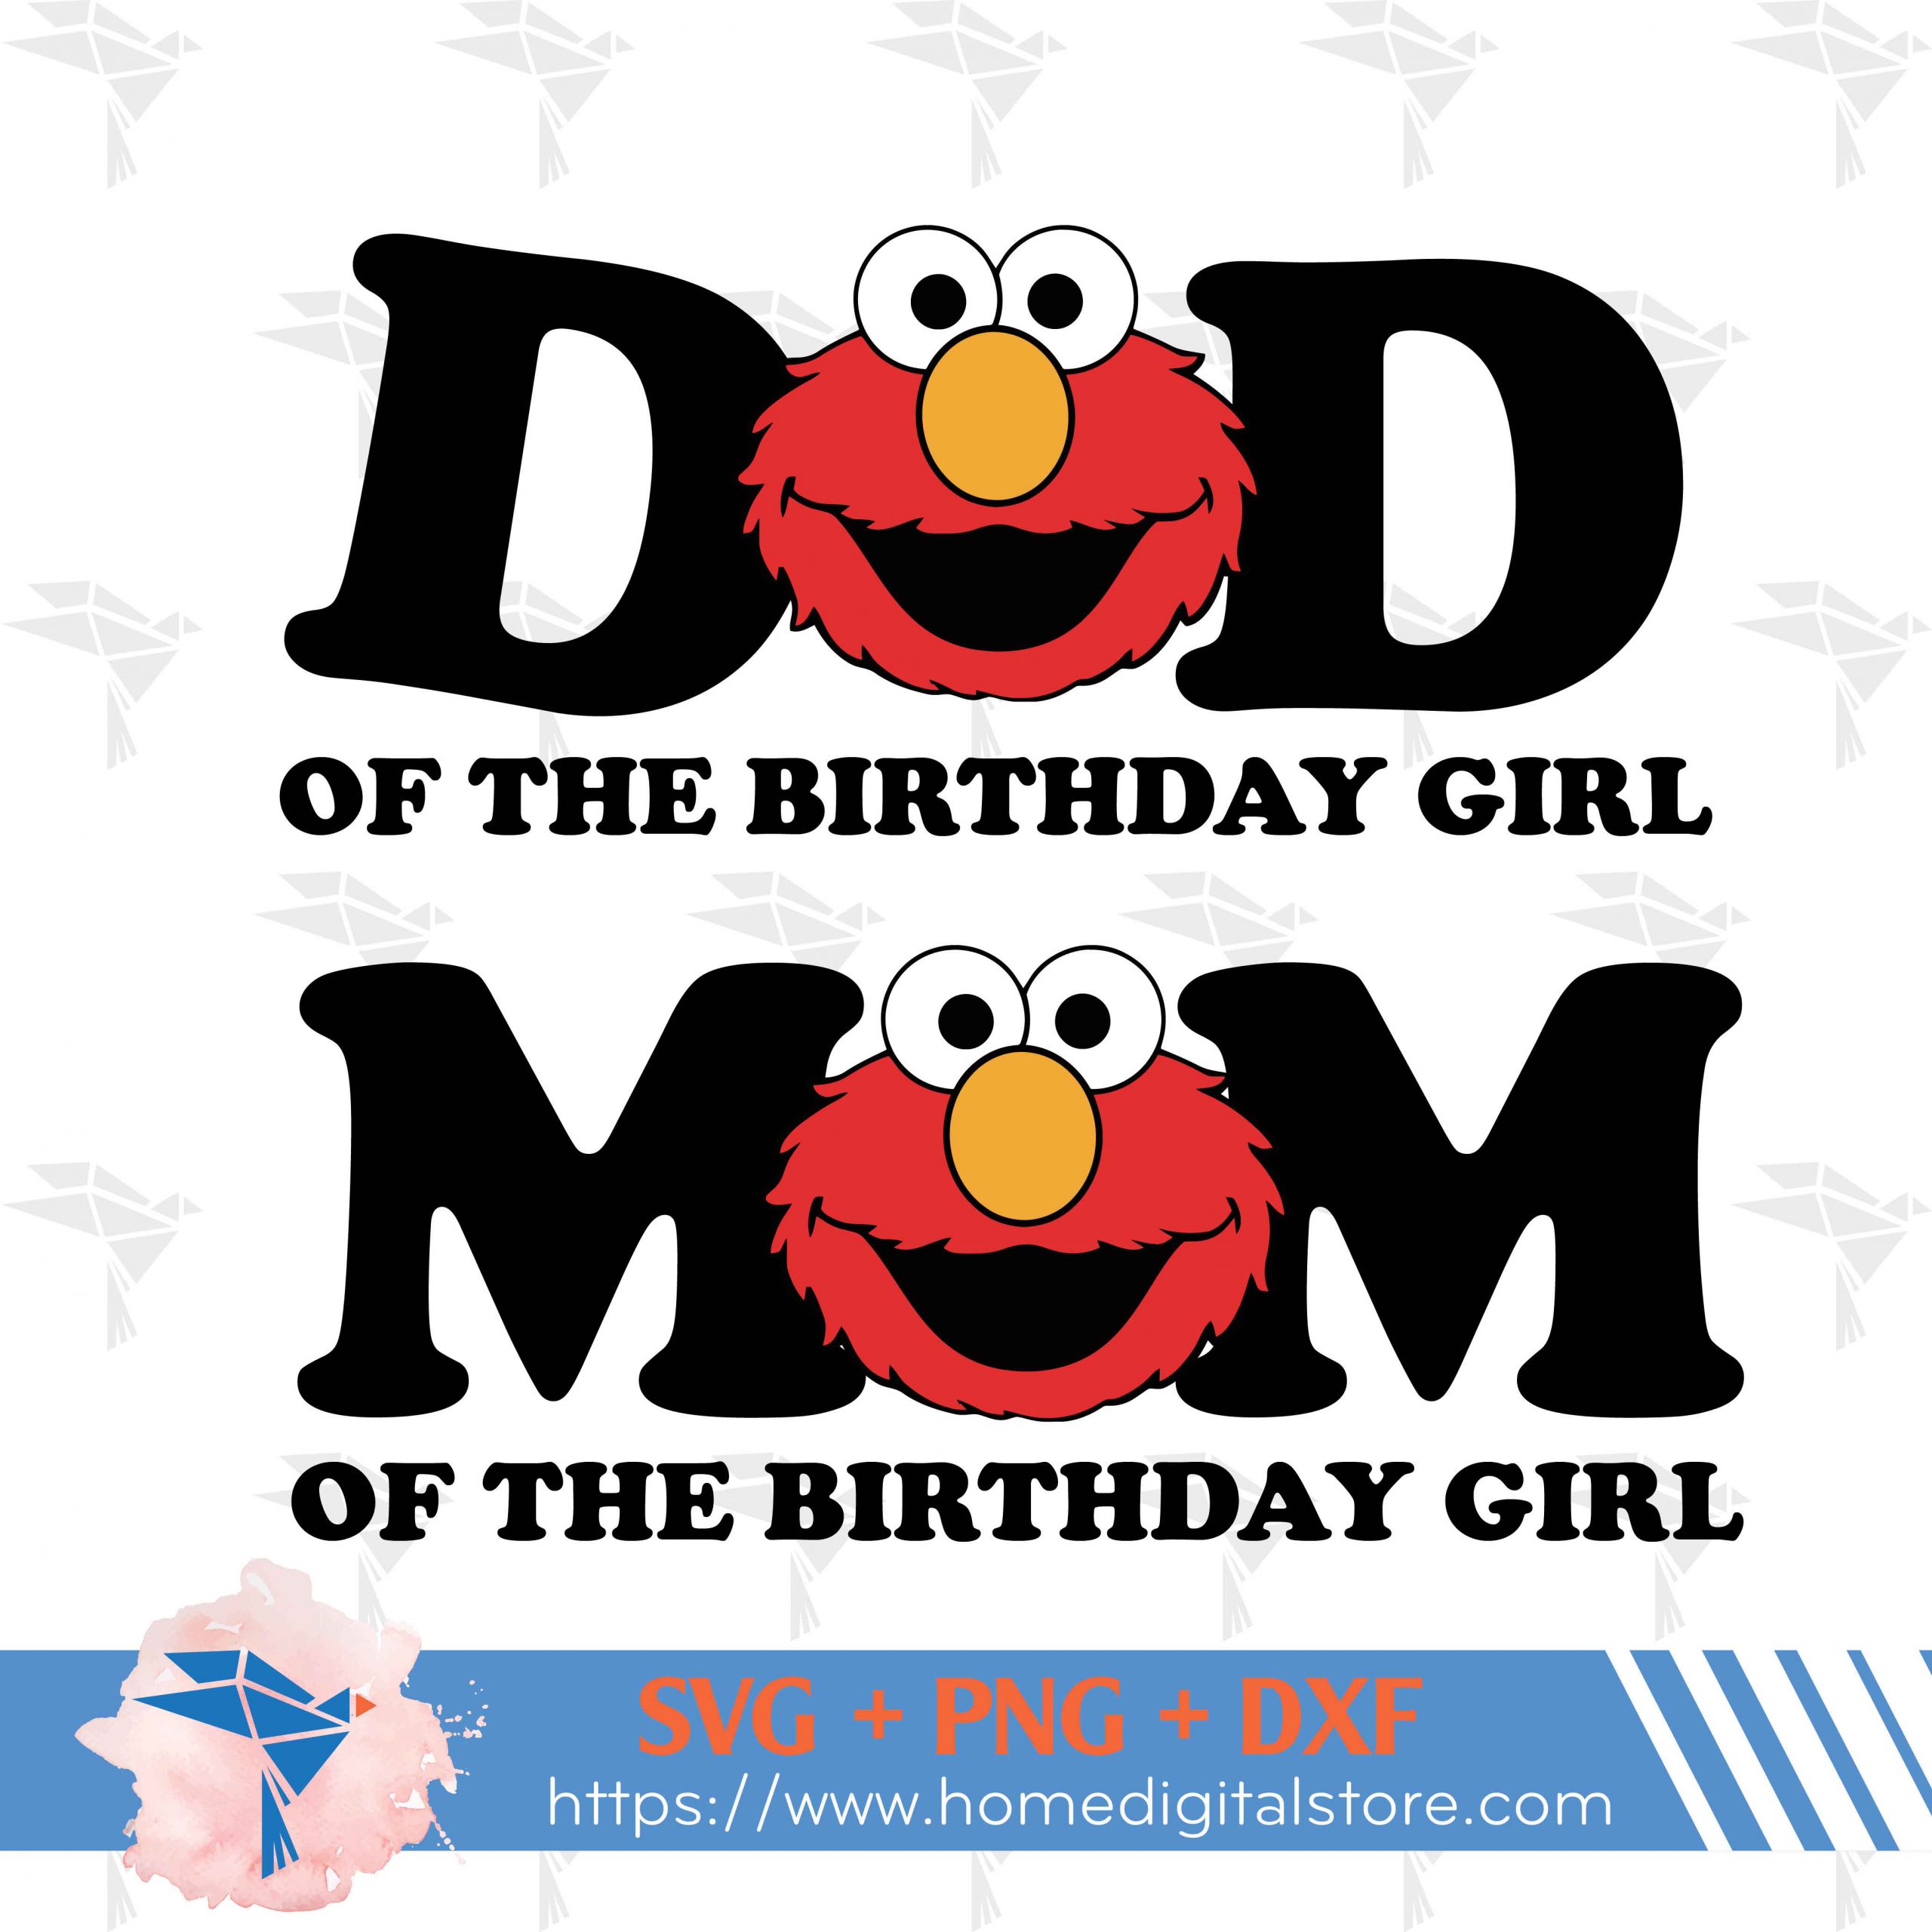 https://homedigitalstore.com/wp-content/uploads/2023/04/Mom-Dad-Birthday-Girl-01-scaled.jpg